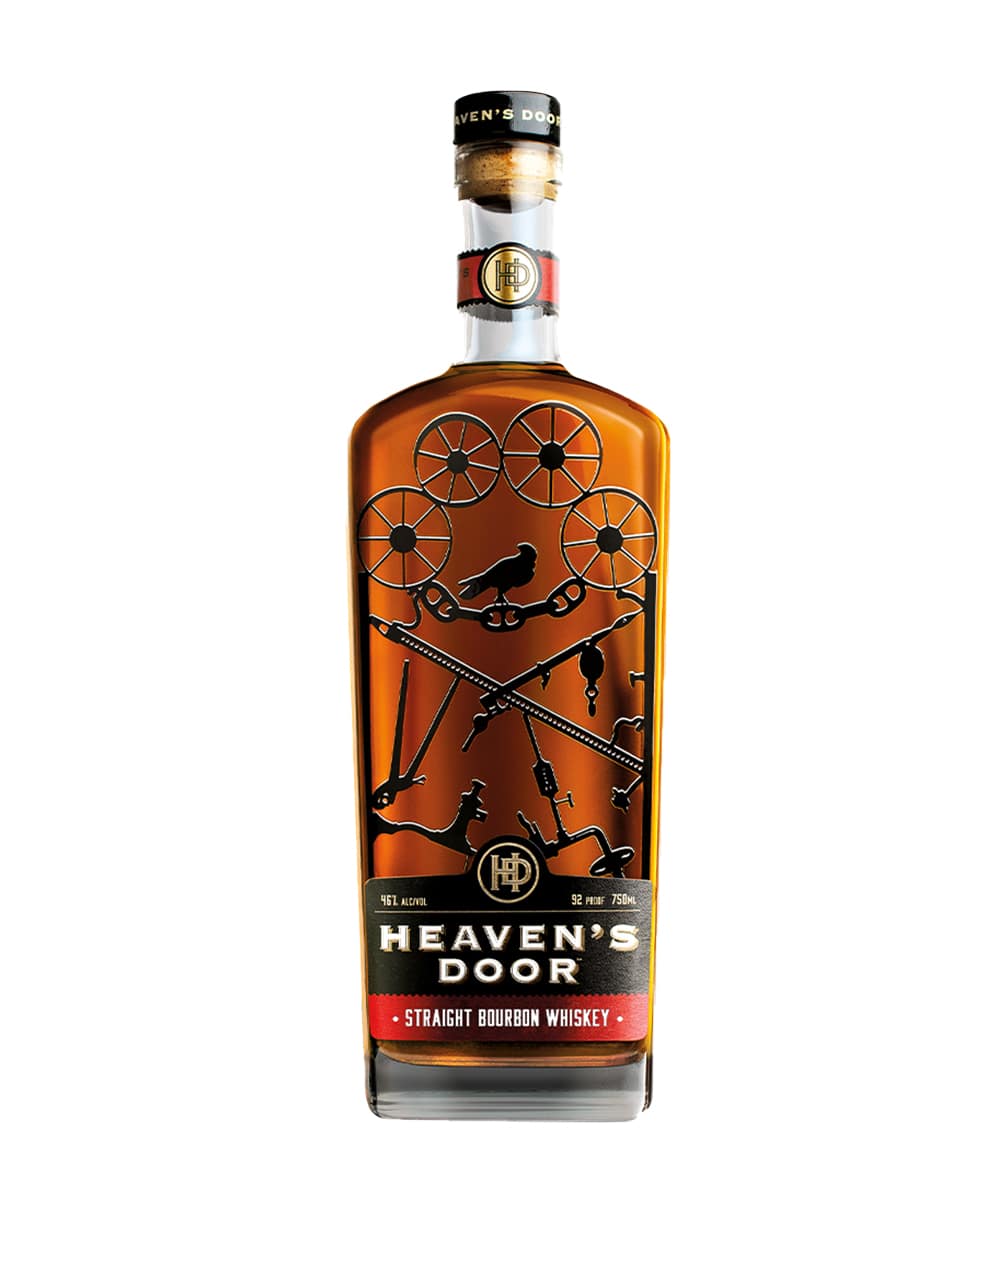 Heavens Door Tennessee Straight Bourbon Whiskey